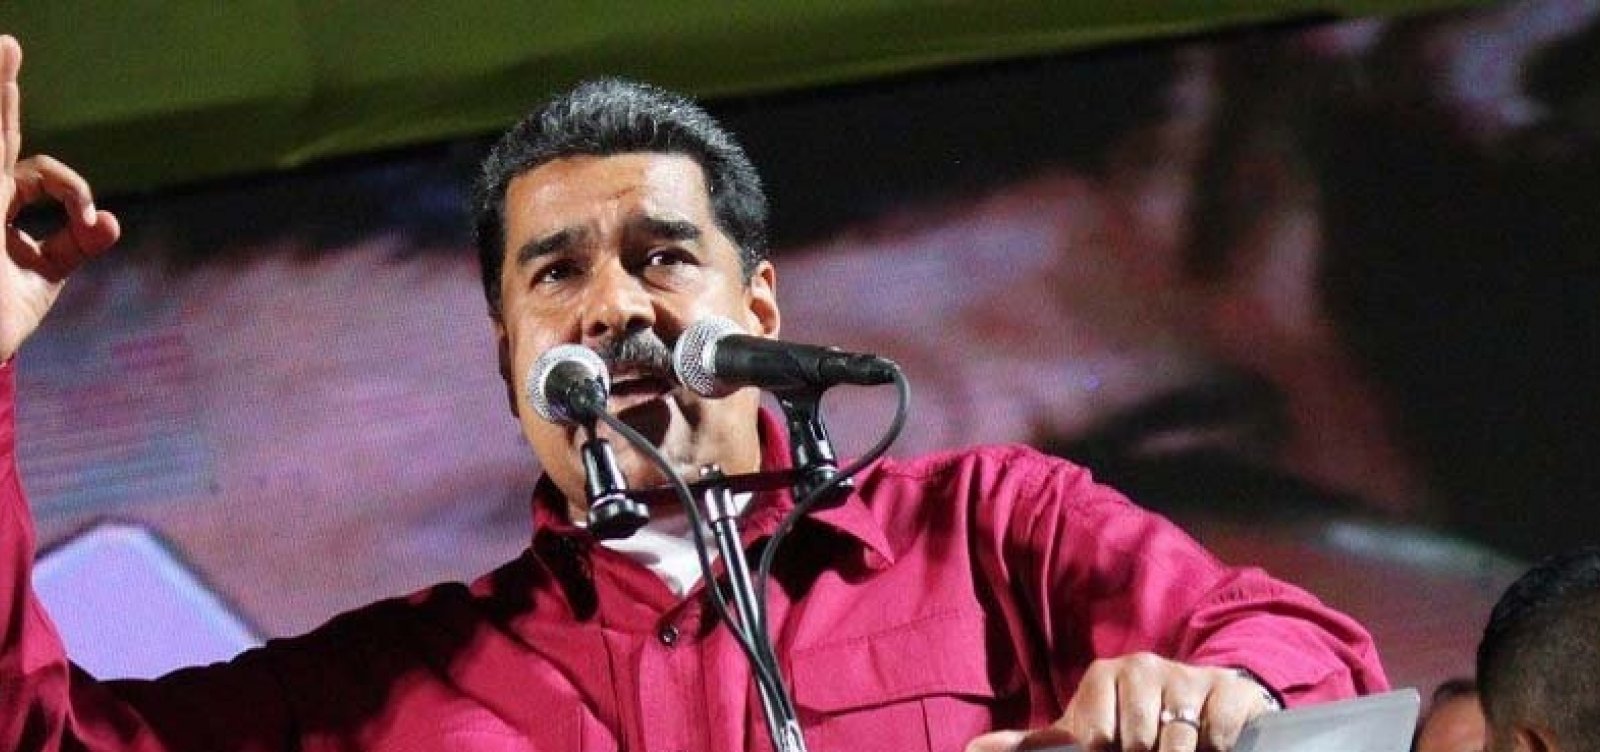 Venezuela rebate futuro ministro e diz que Brasil convidou Maduro para posse de Bolsonaro